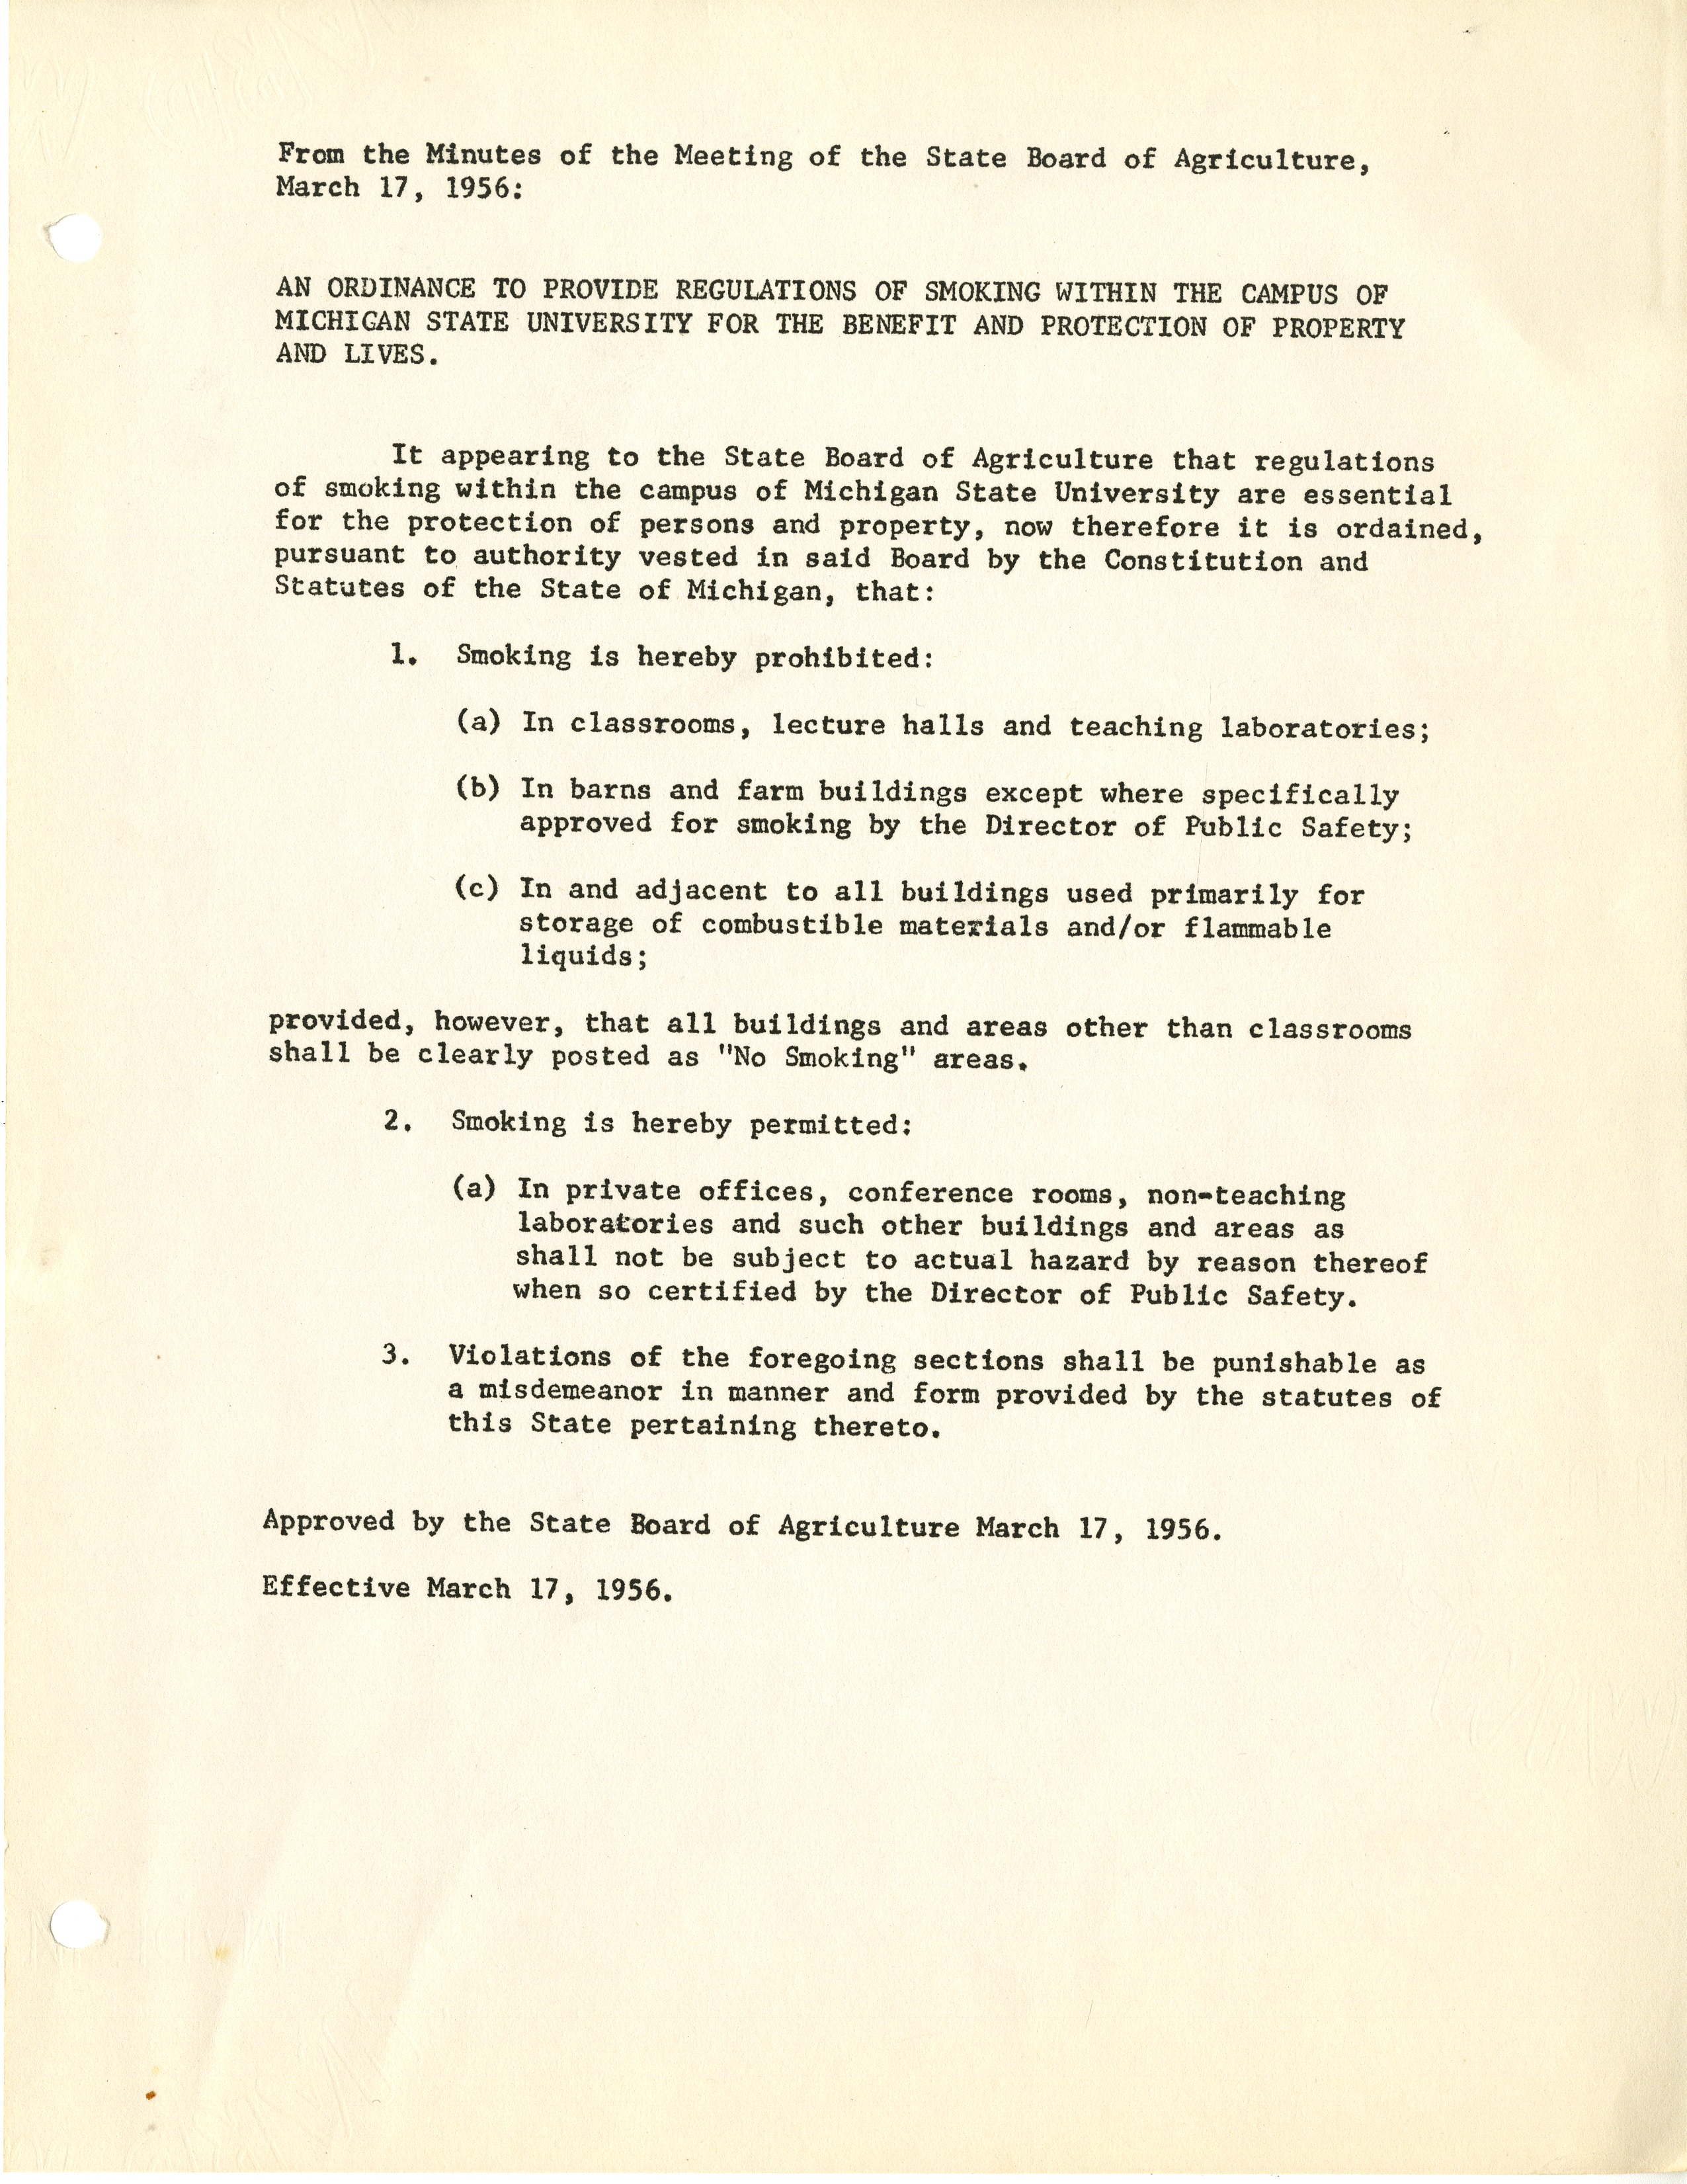 MSU Ordinances, 1959